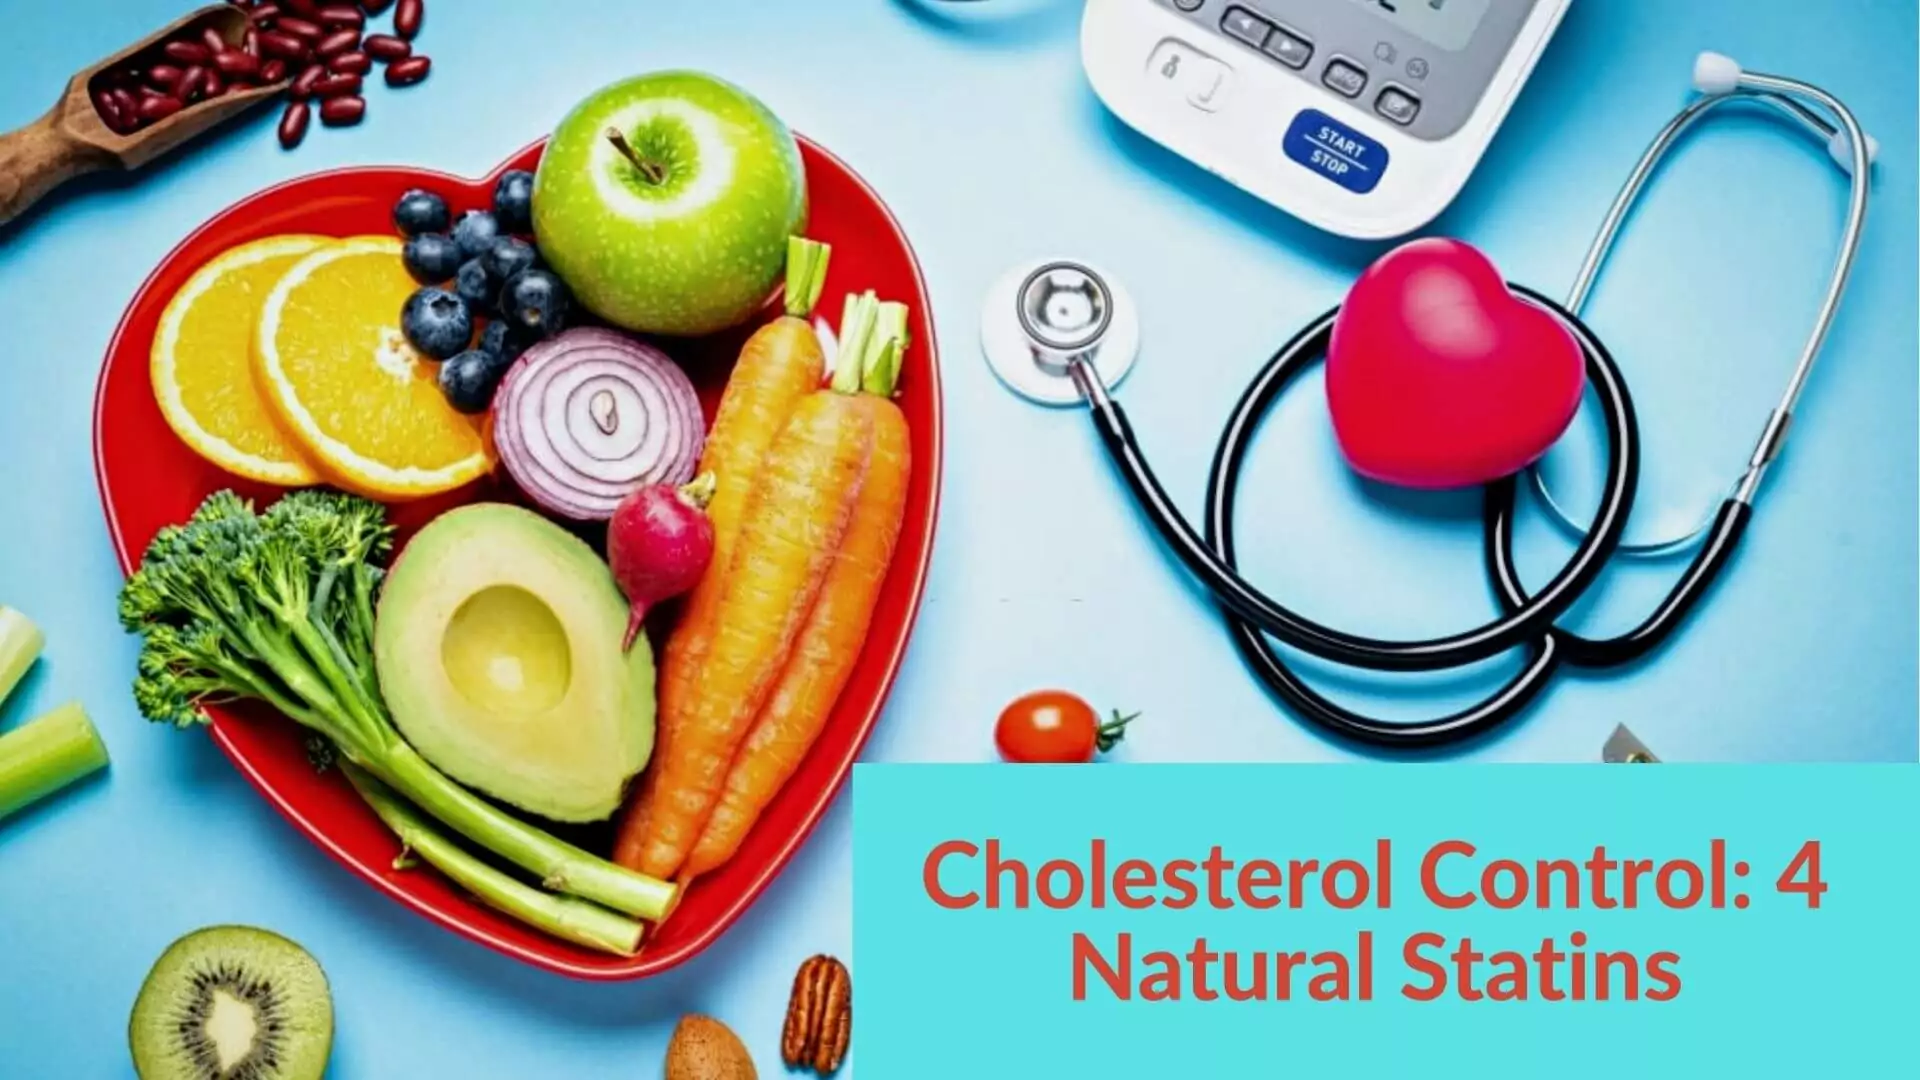 Cholesterol Control: 4 Natural Statins